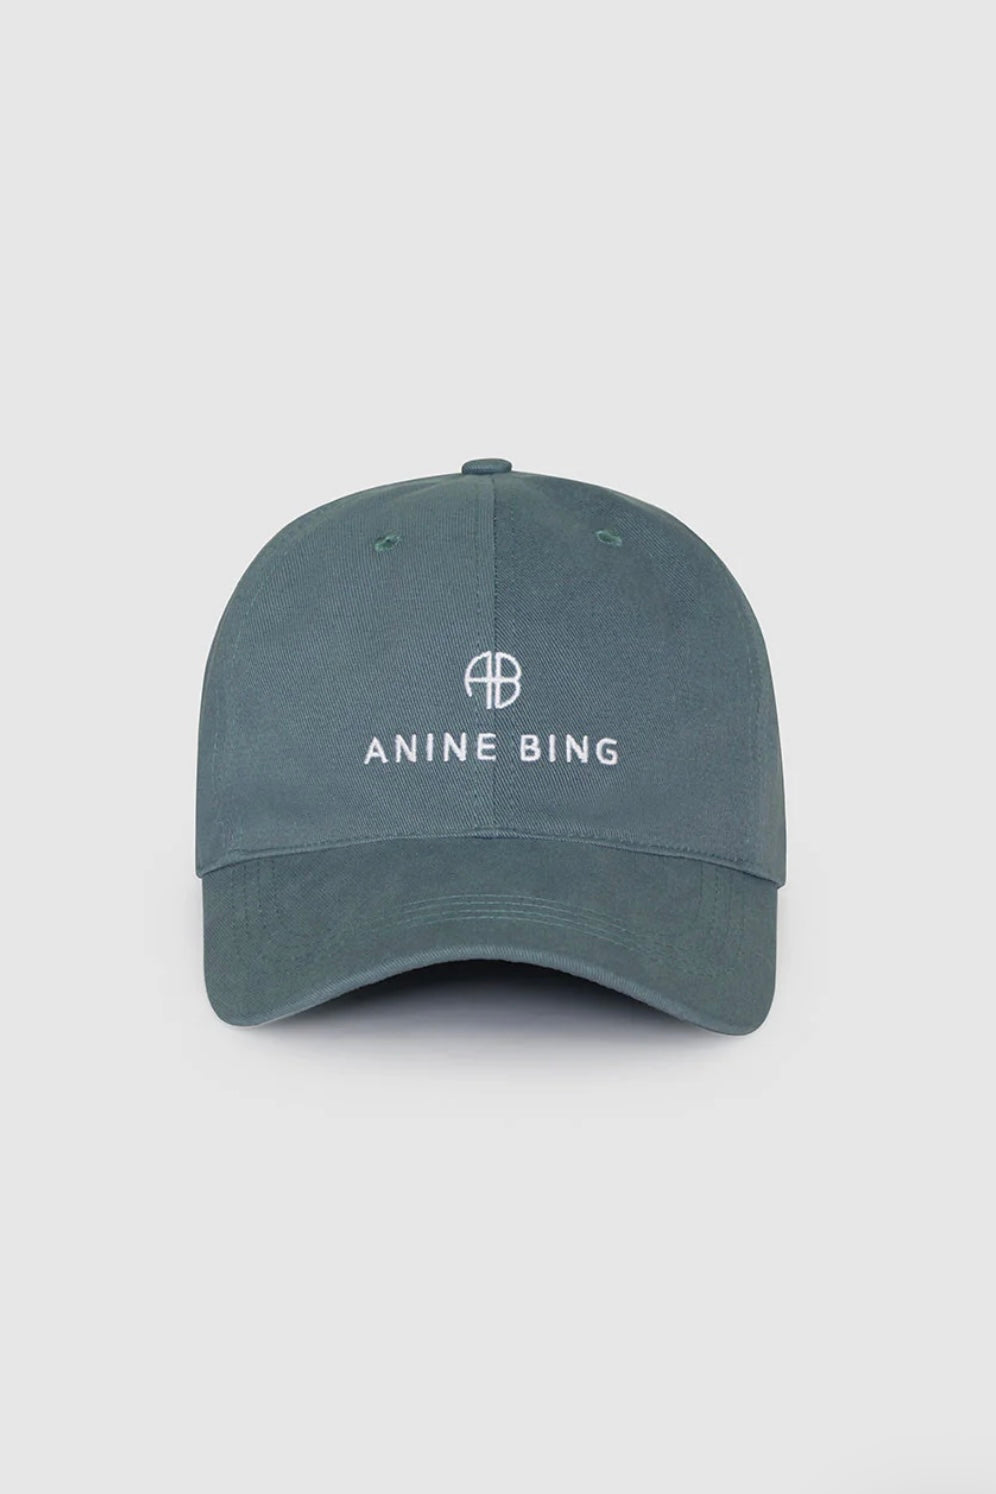 Anine Bing Jeremy Baseball Cap - Dark Sage A-12-9084-310